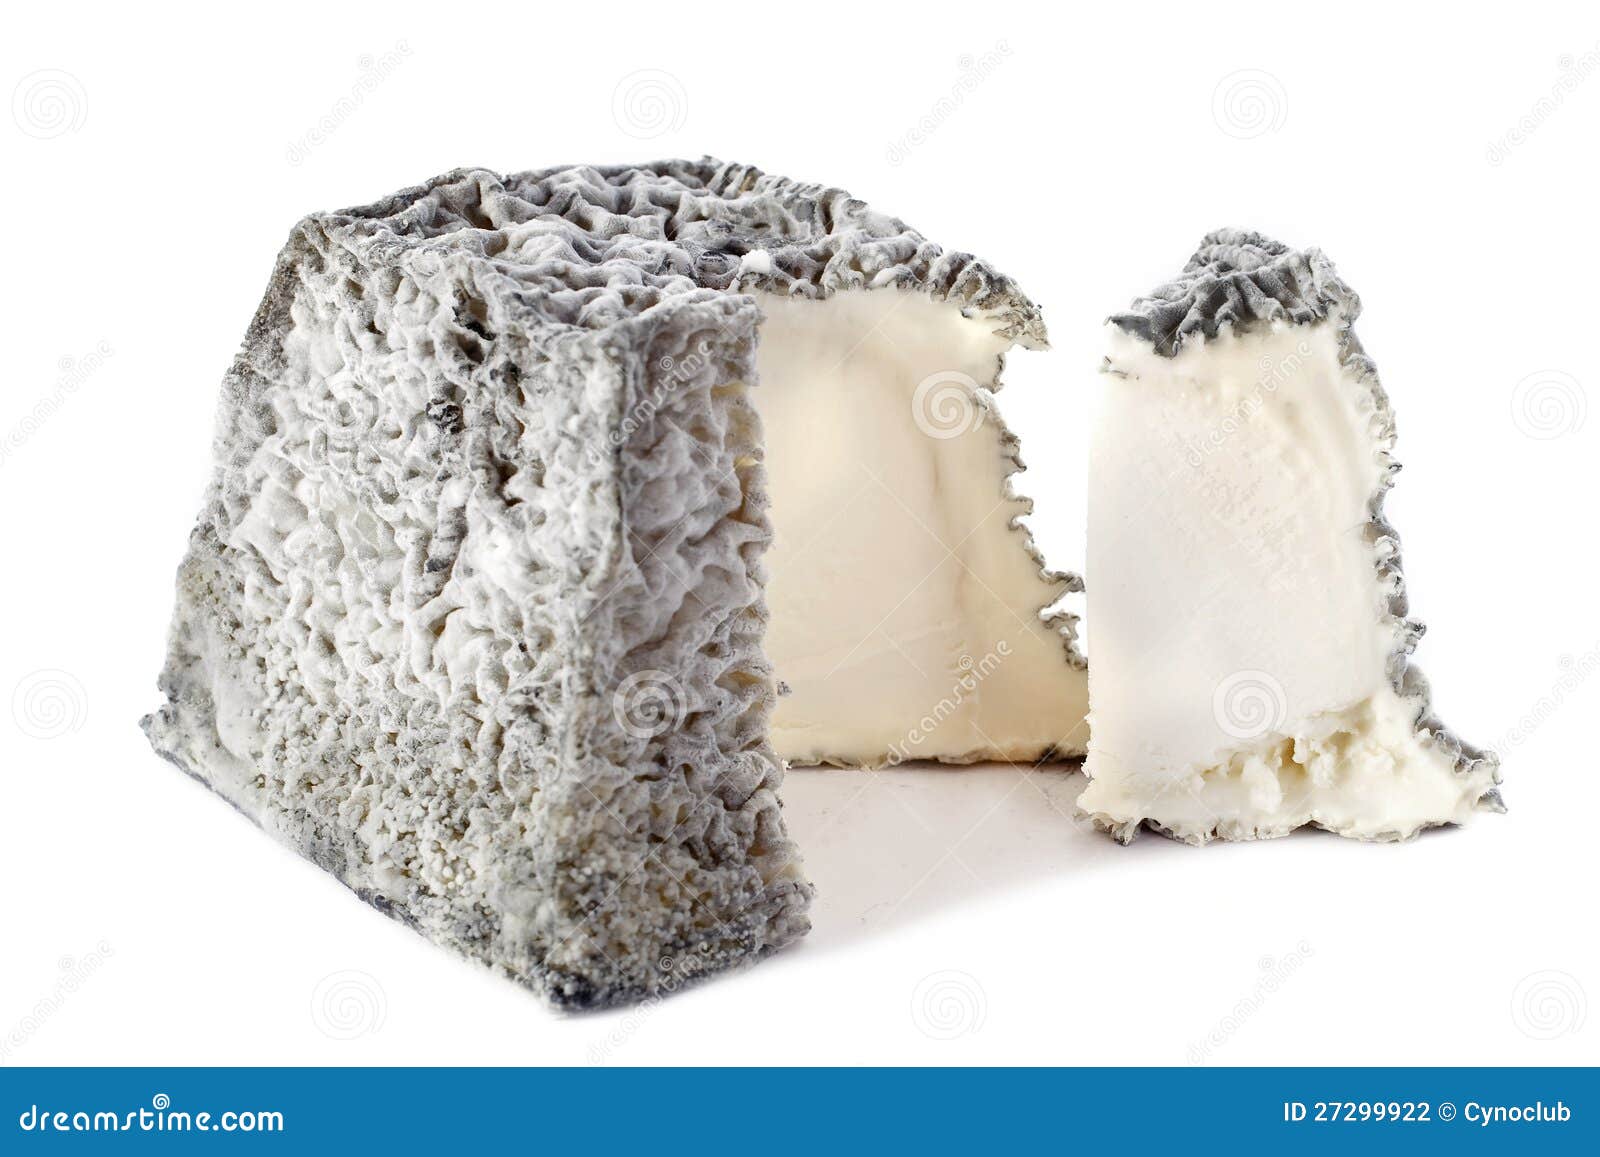 [Image: fromage-de-ch%C3%A8vre-valencay-27299922.jpg]